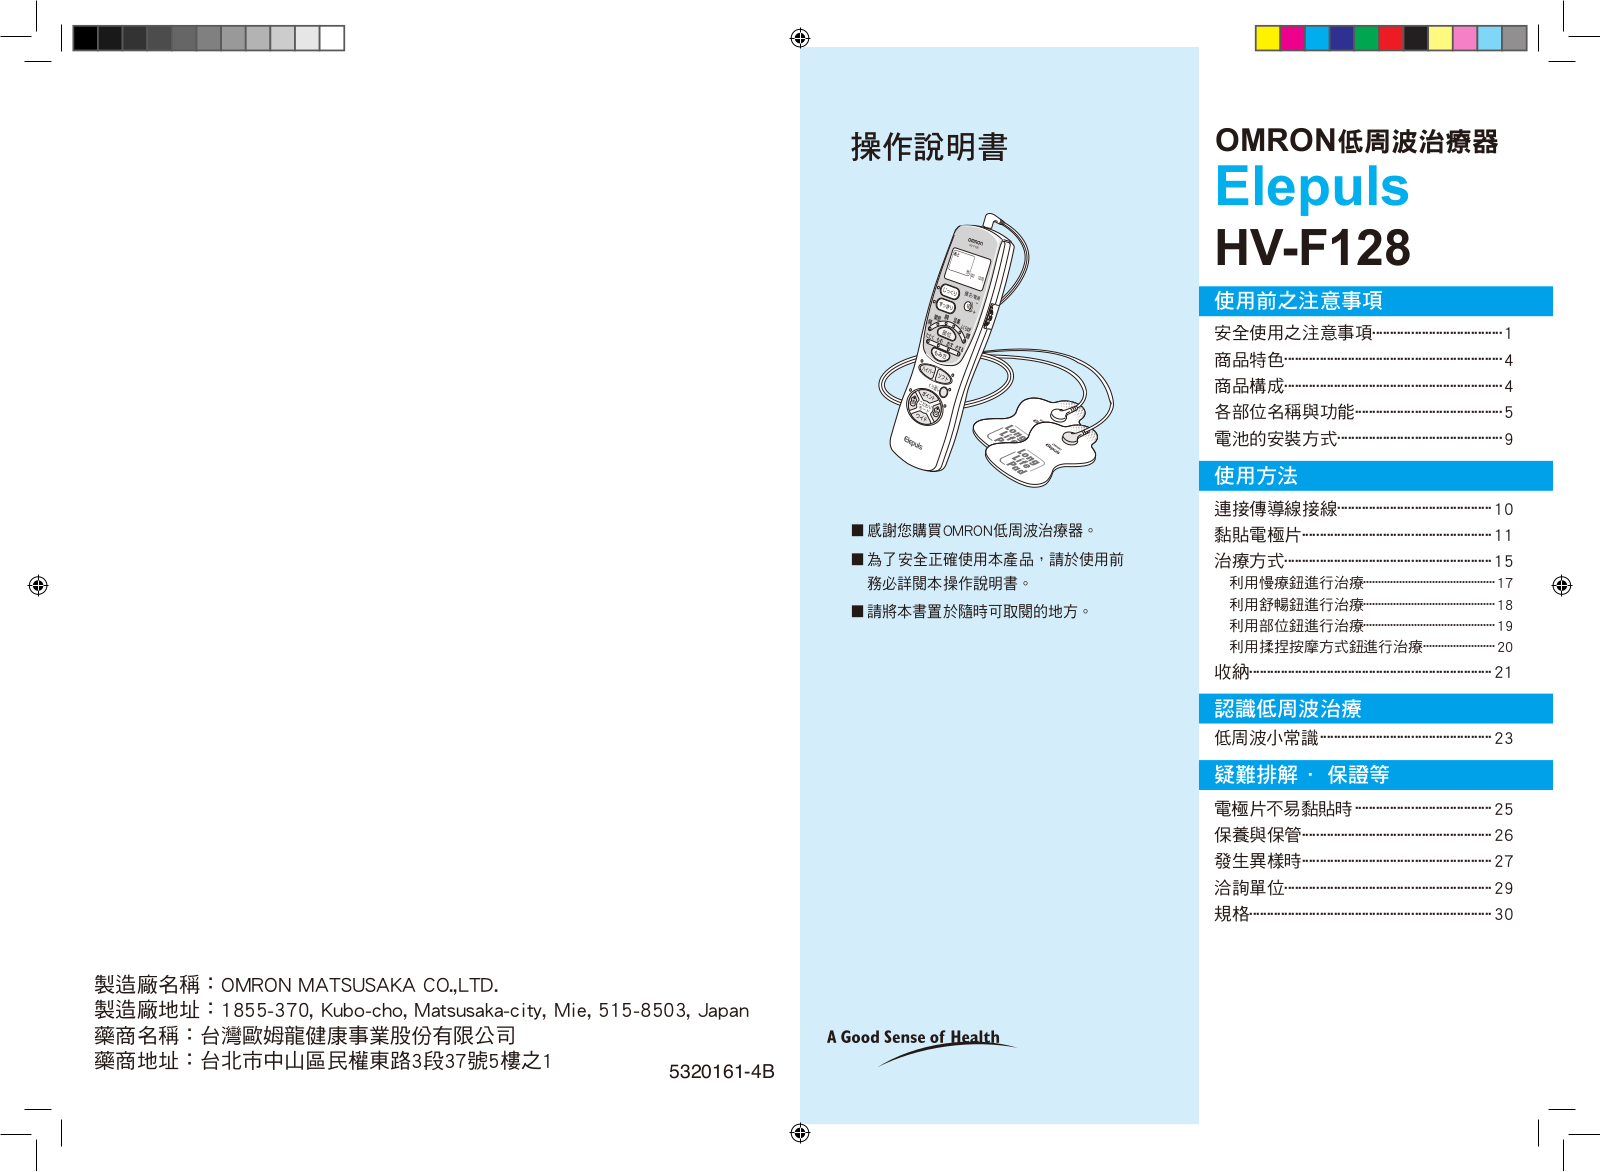 OMRON HV-F128 operating Manual